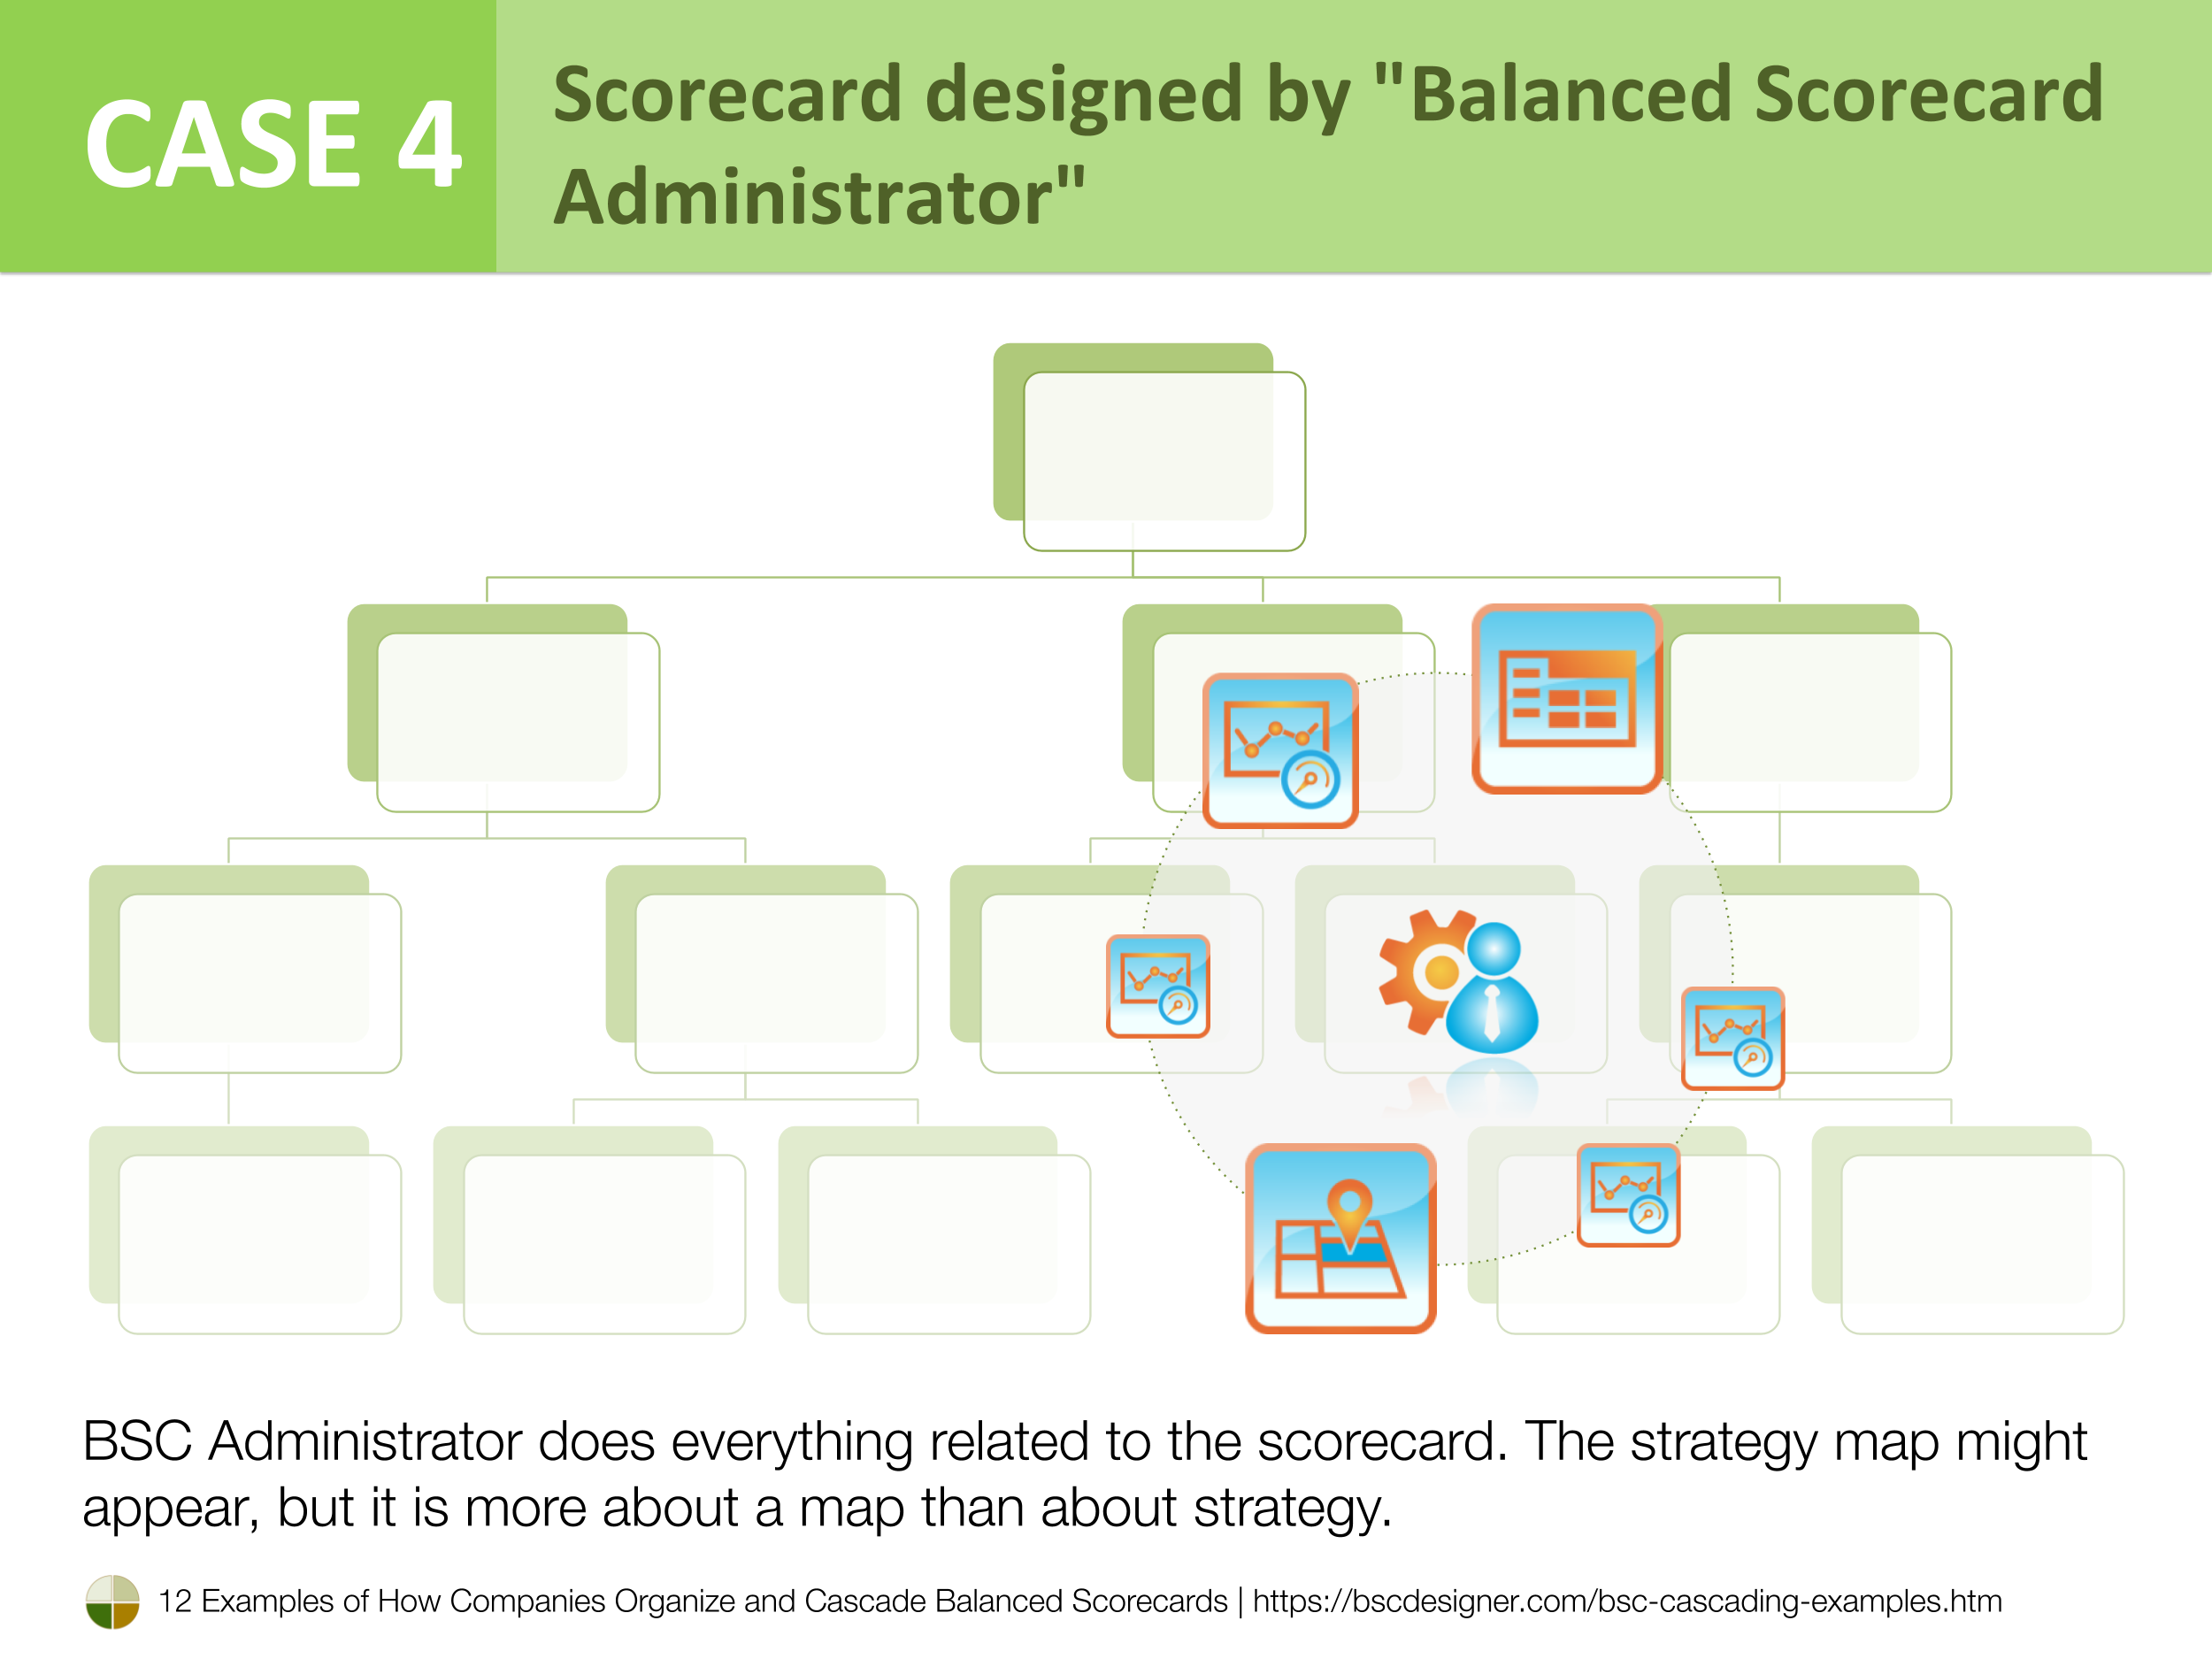 Case 4 - Scorecard designed by "Balanced Scorecard Administrator" 